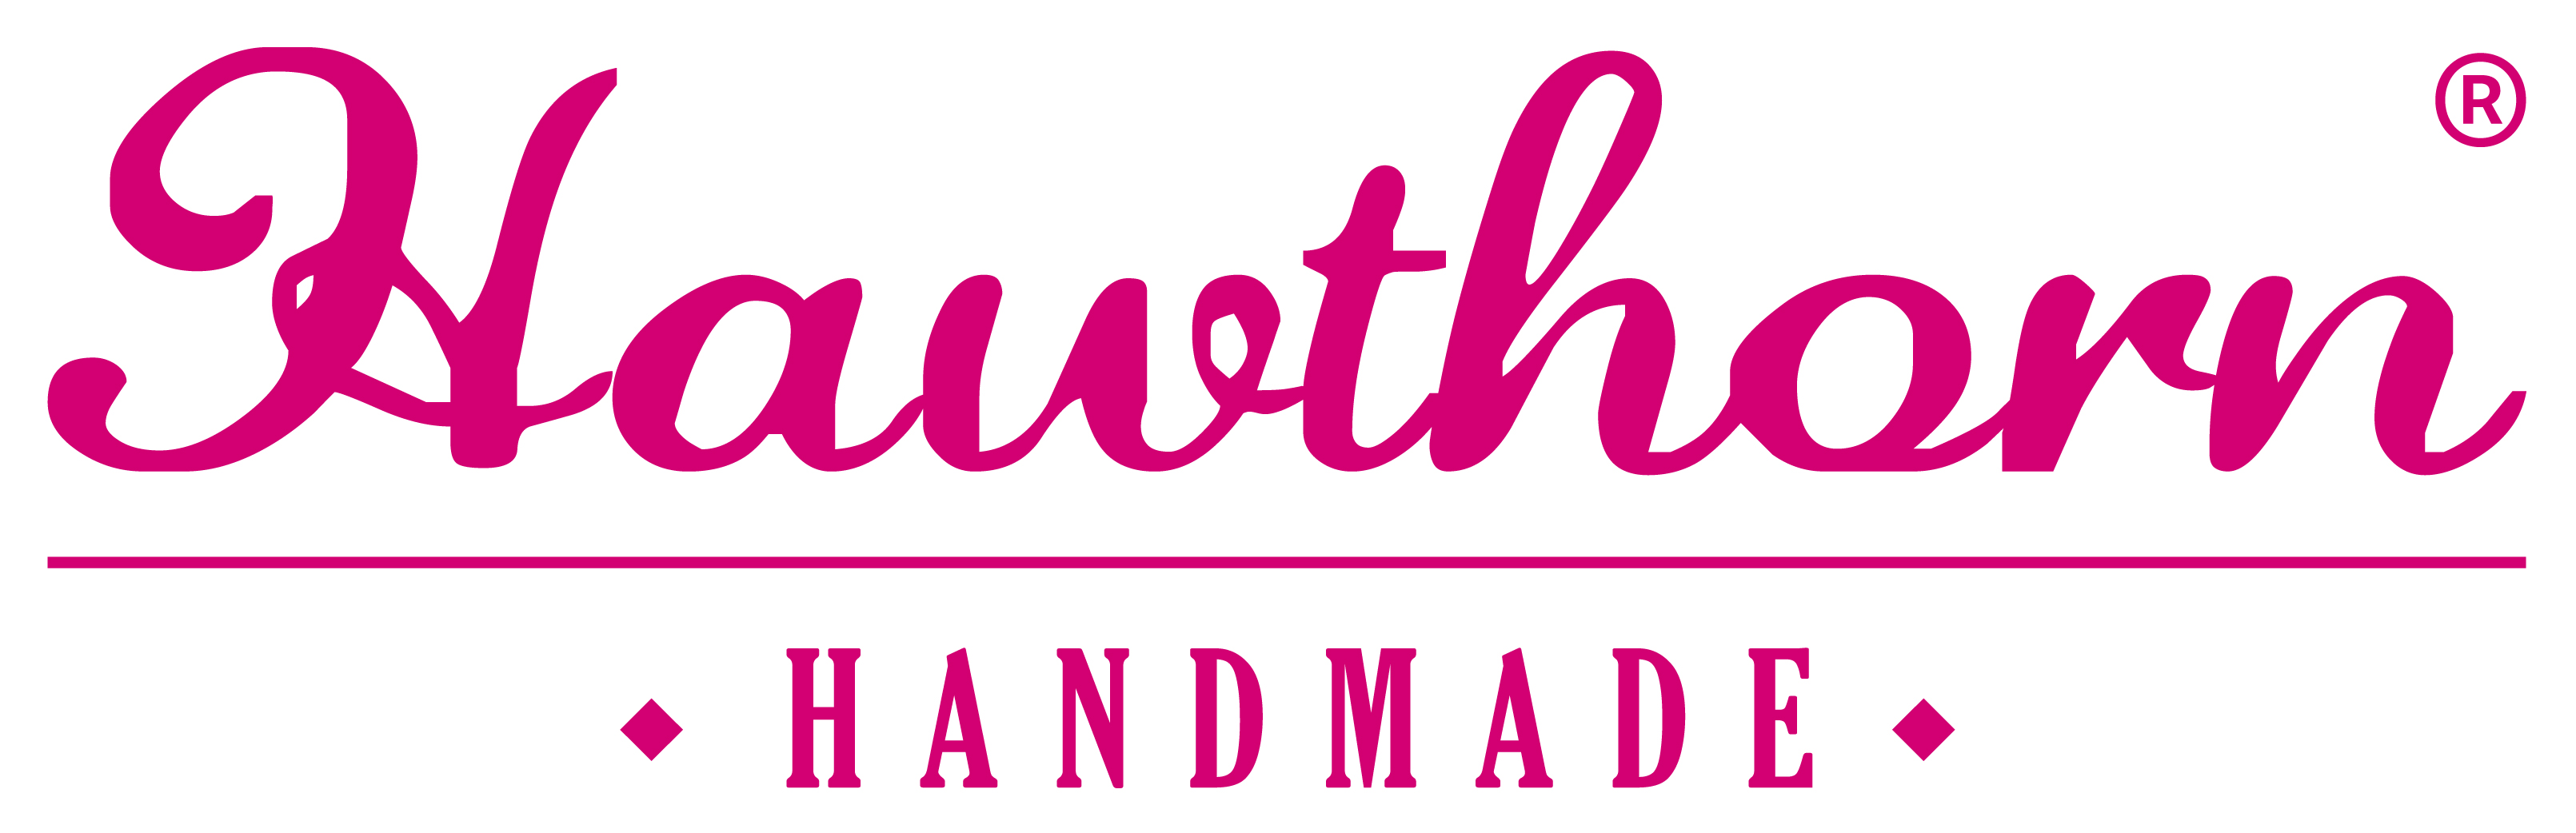 logo for Hawthorn Handmade Limited